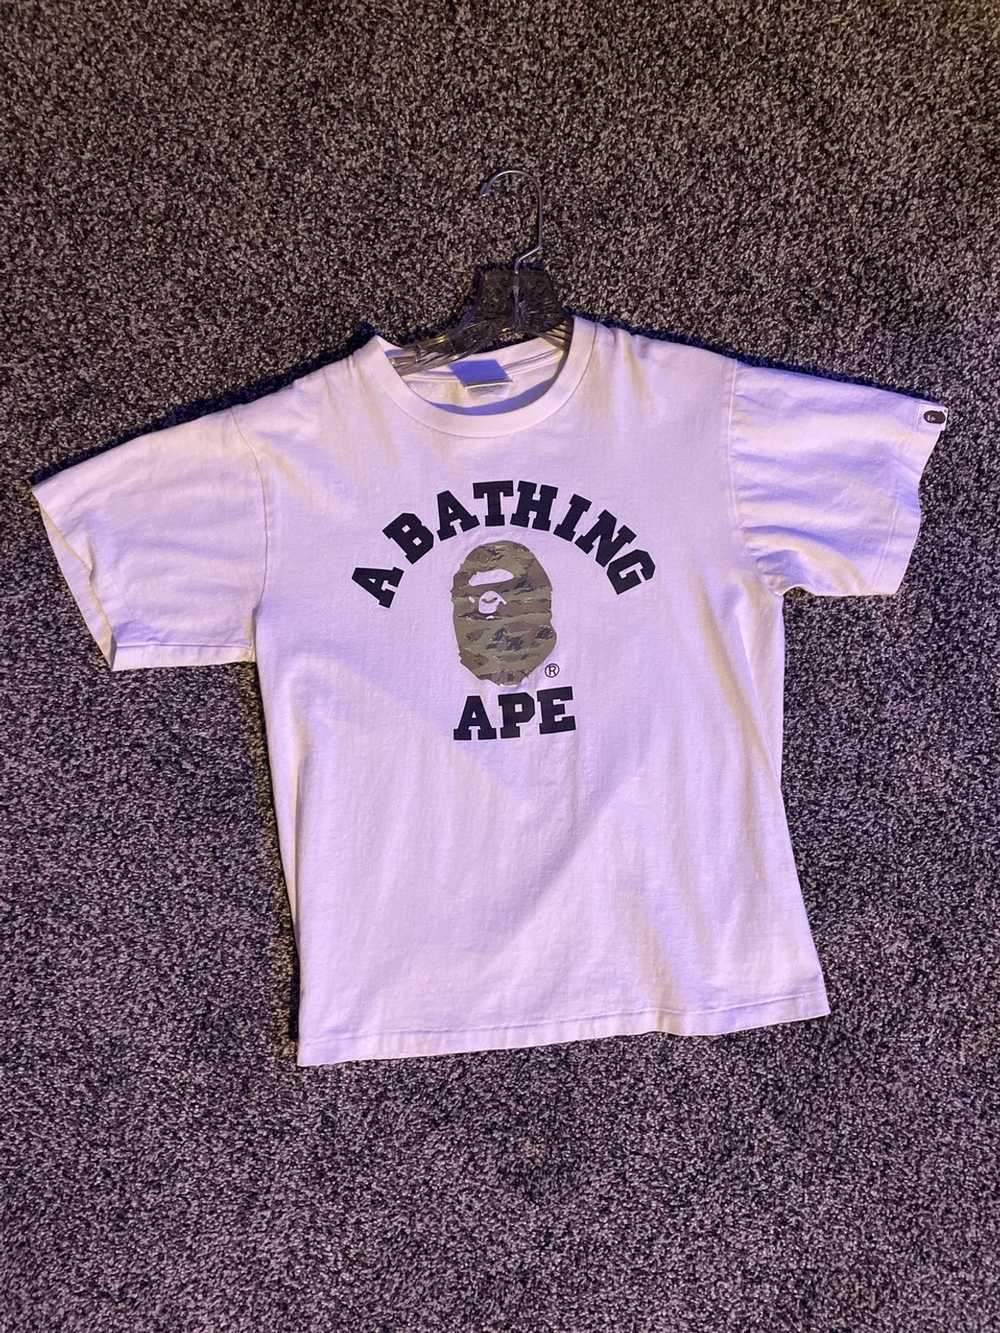 Bape A BATHING APE camo shirt - image 1